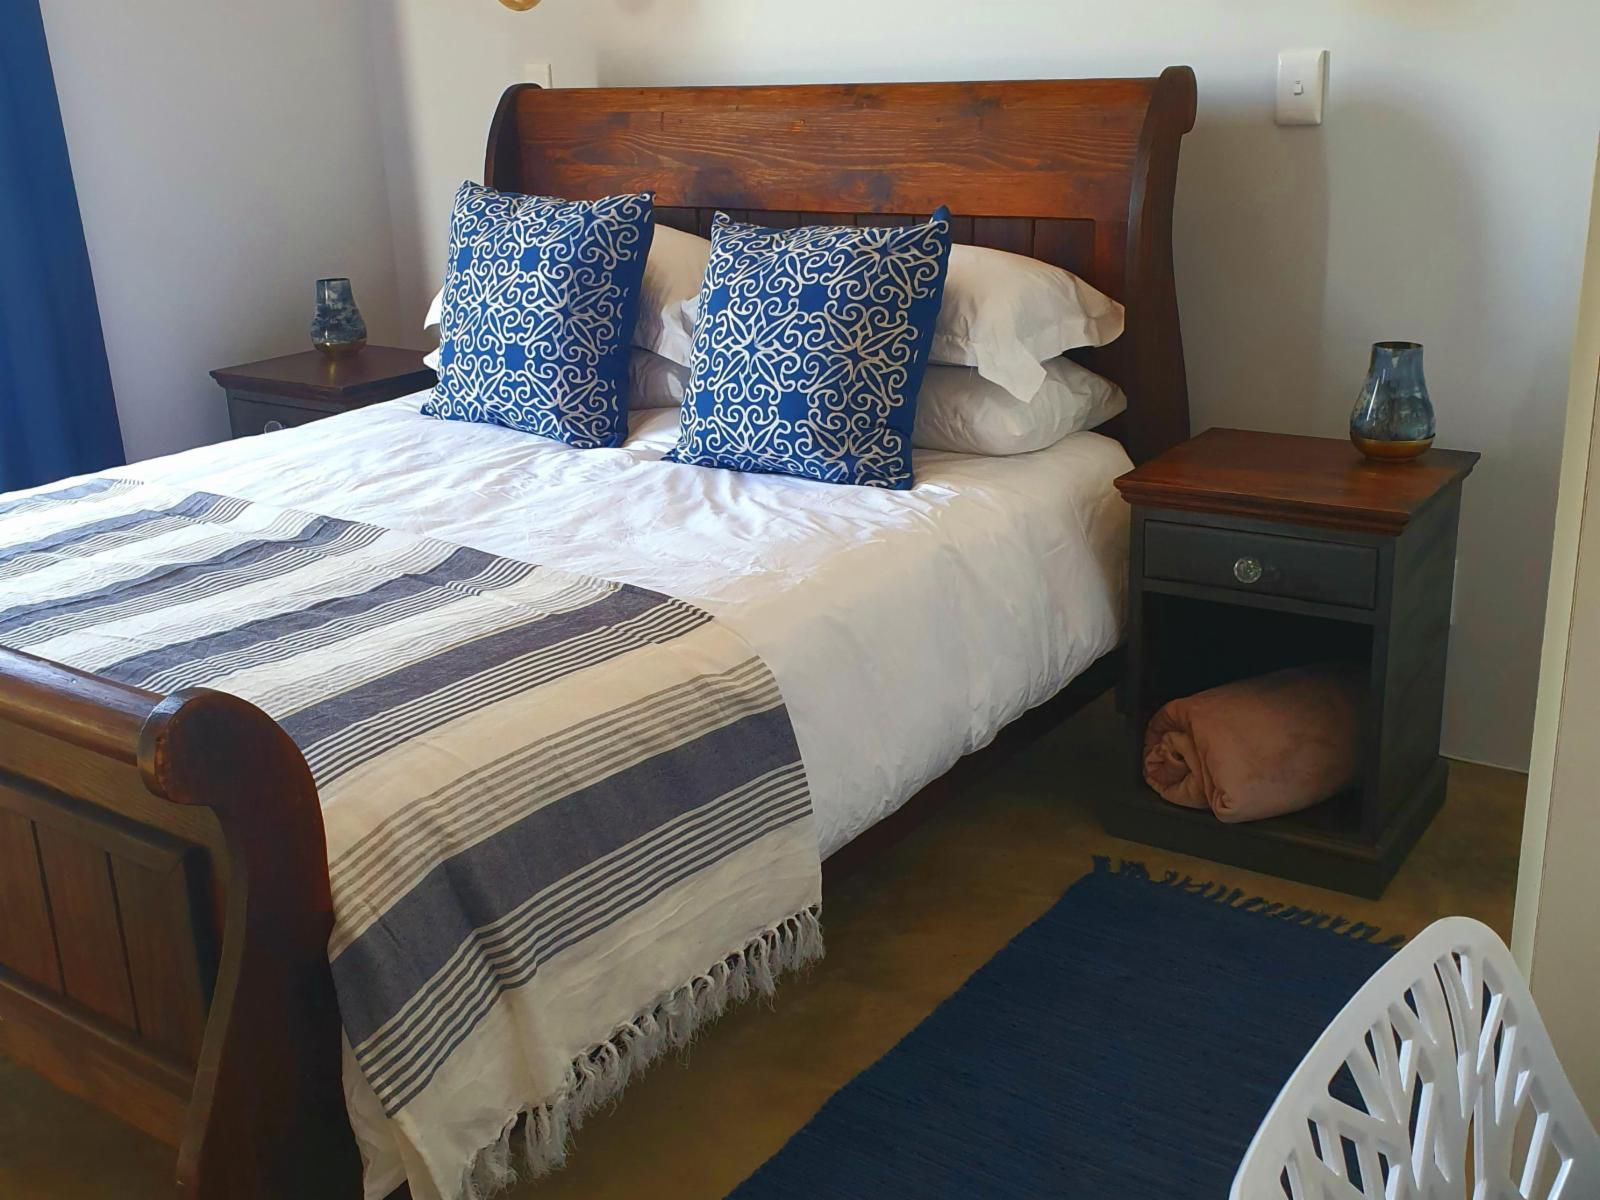 Kaalvoete Struisbaai Western Cape South Africa Bedroom